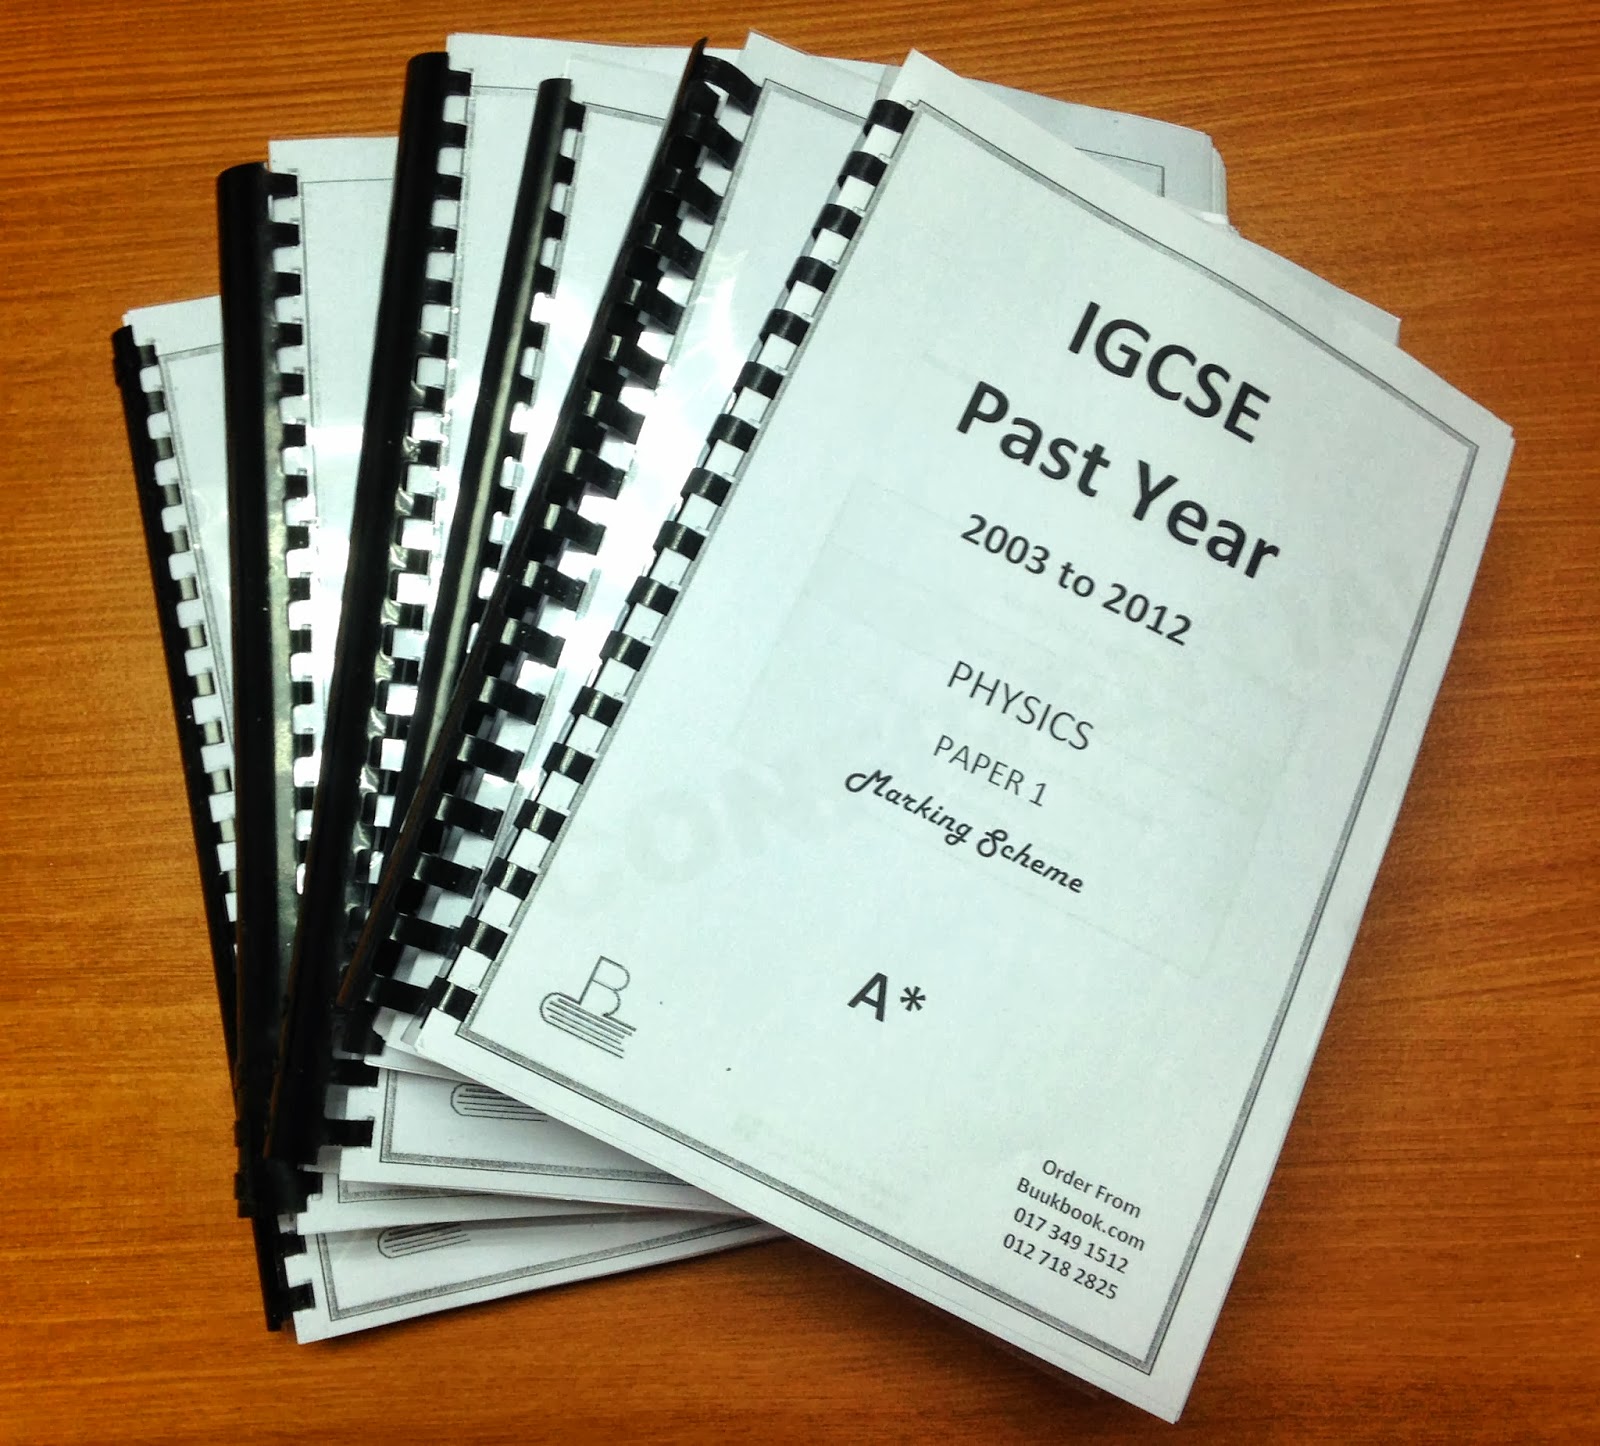 mr sai mun : IGCSE Past Year Papers